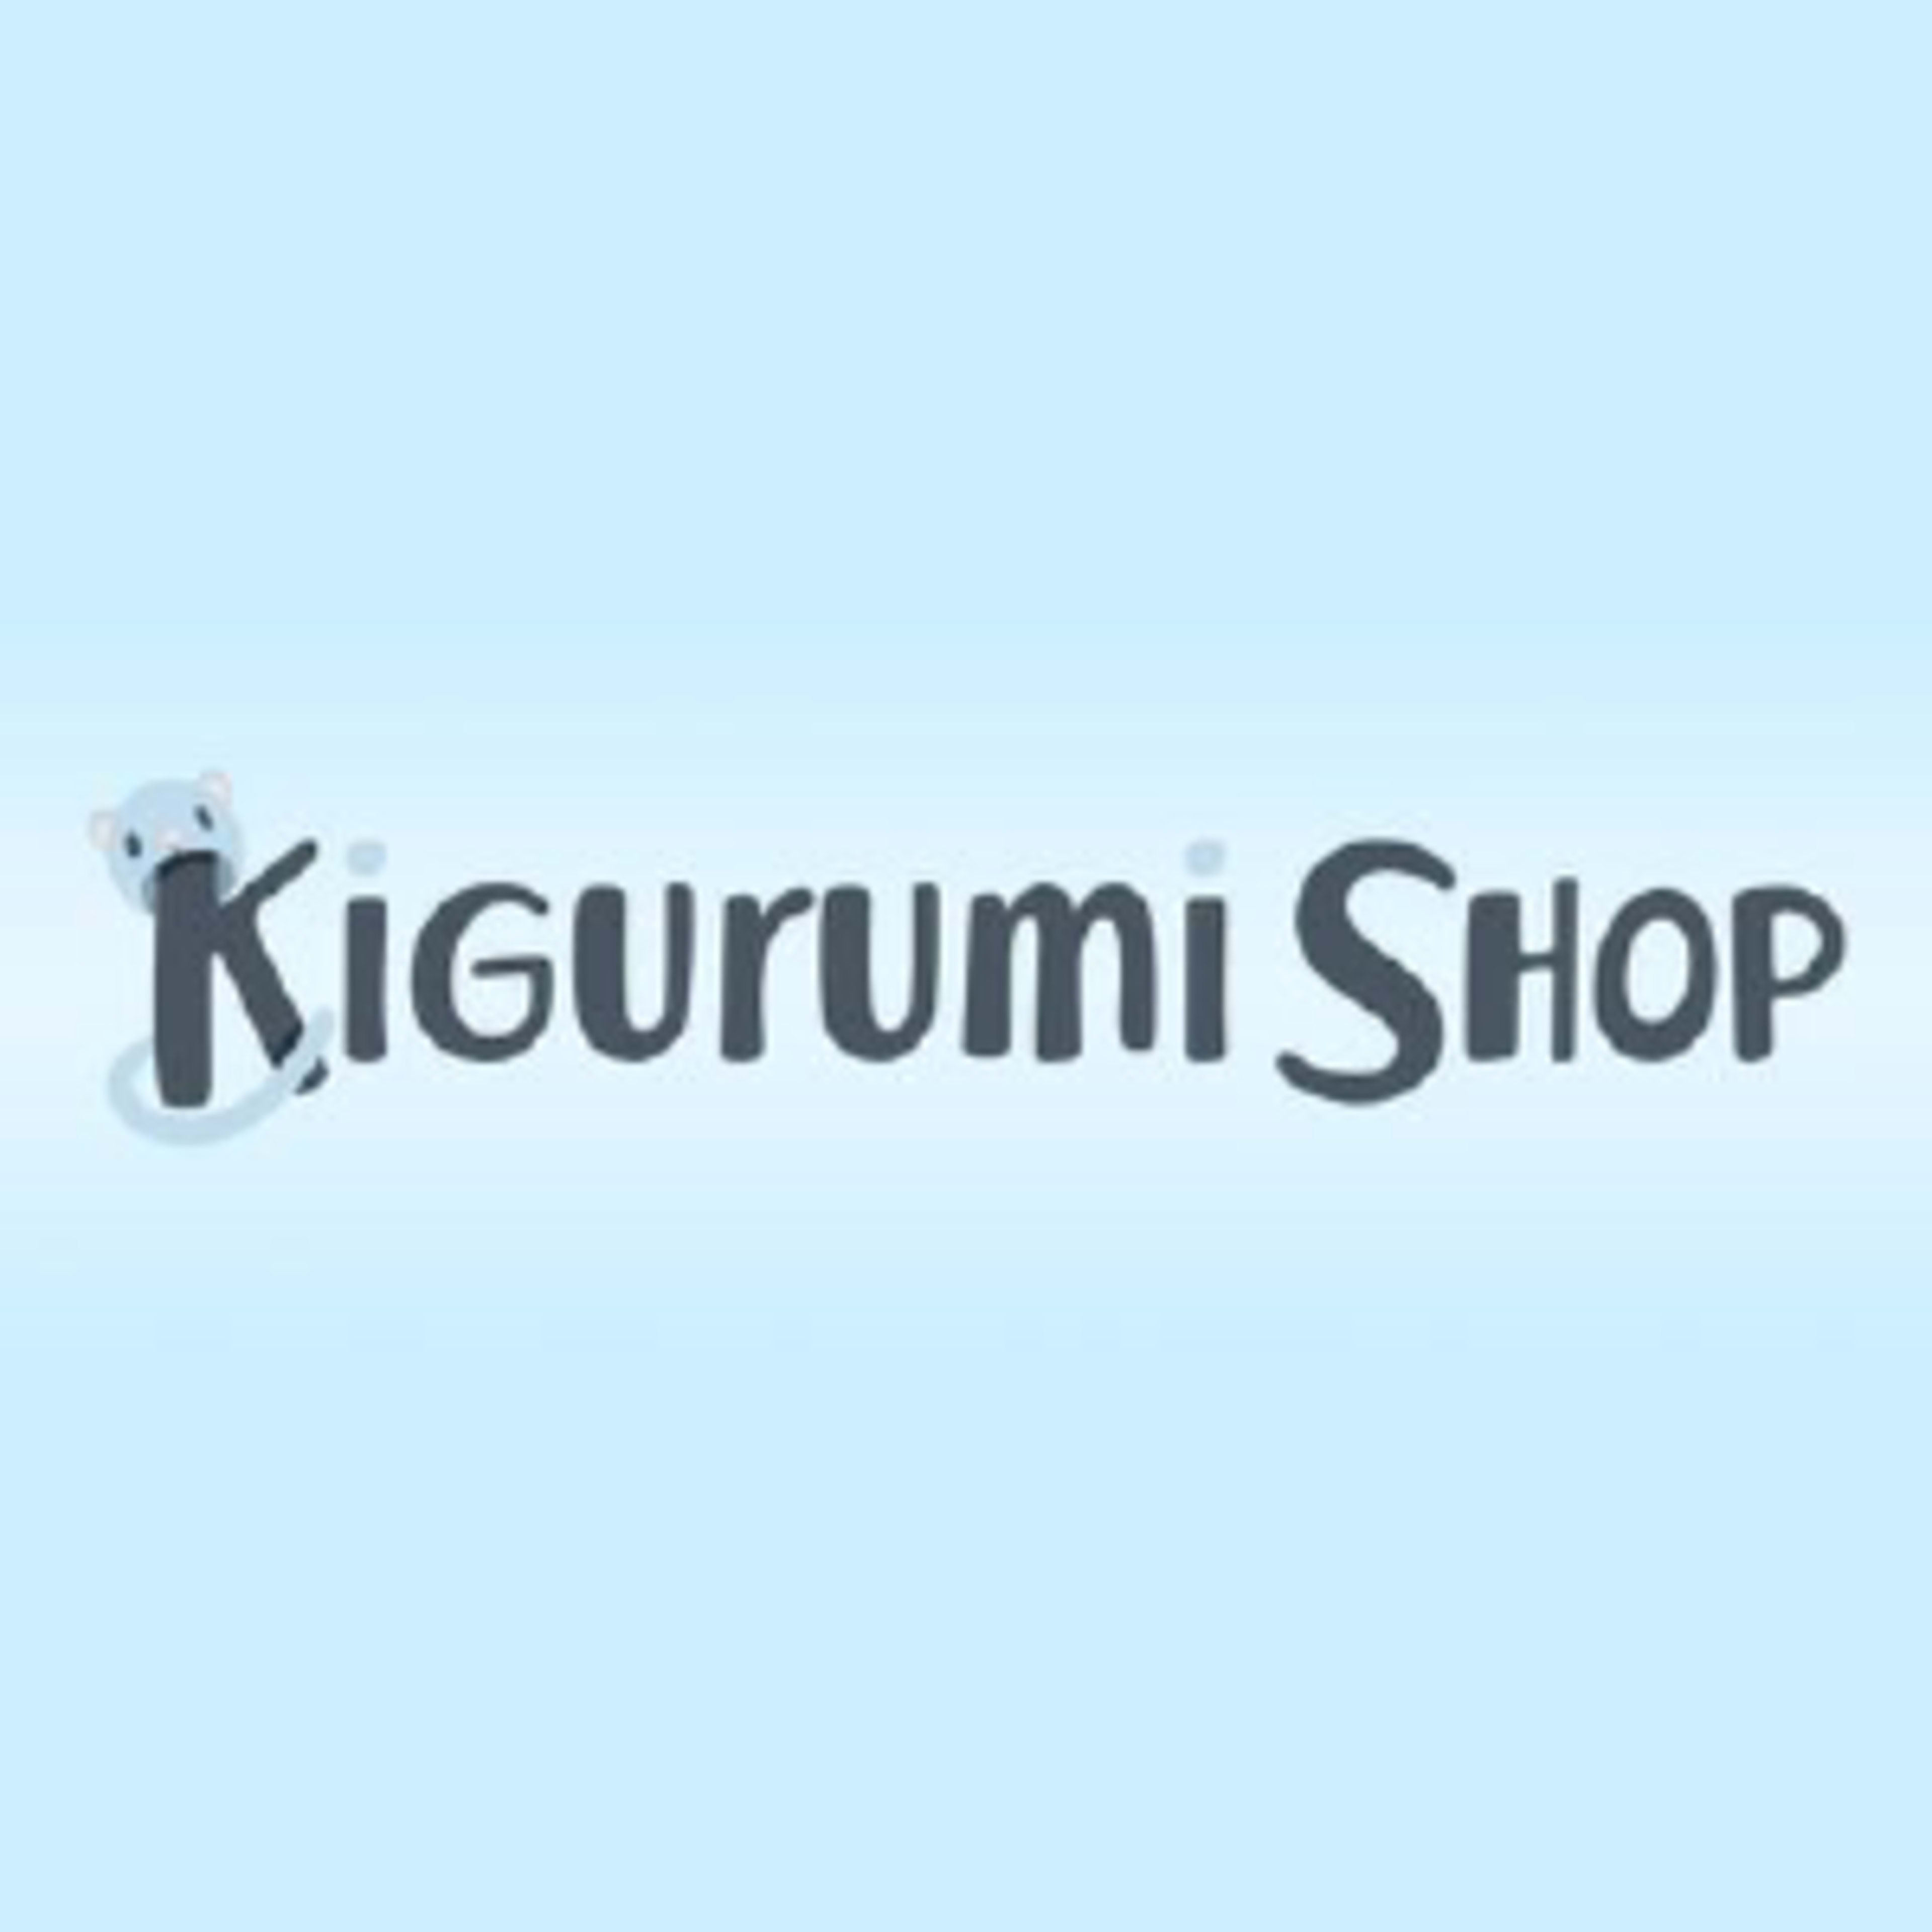 Kigurumi ShopCode